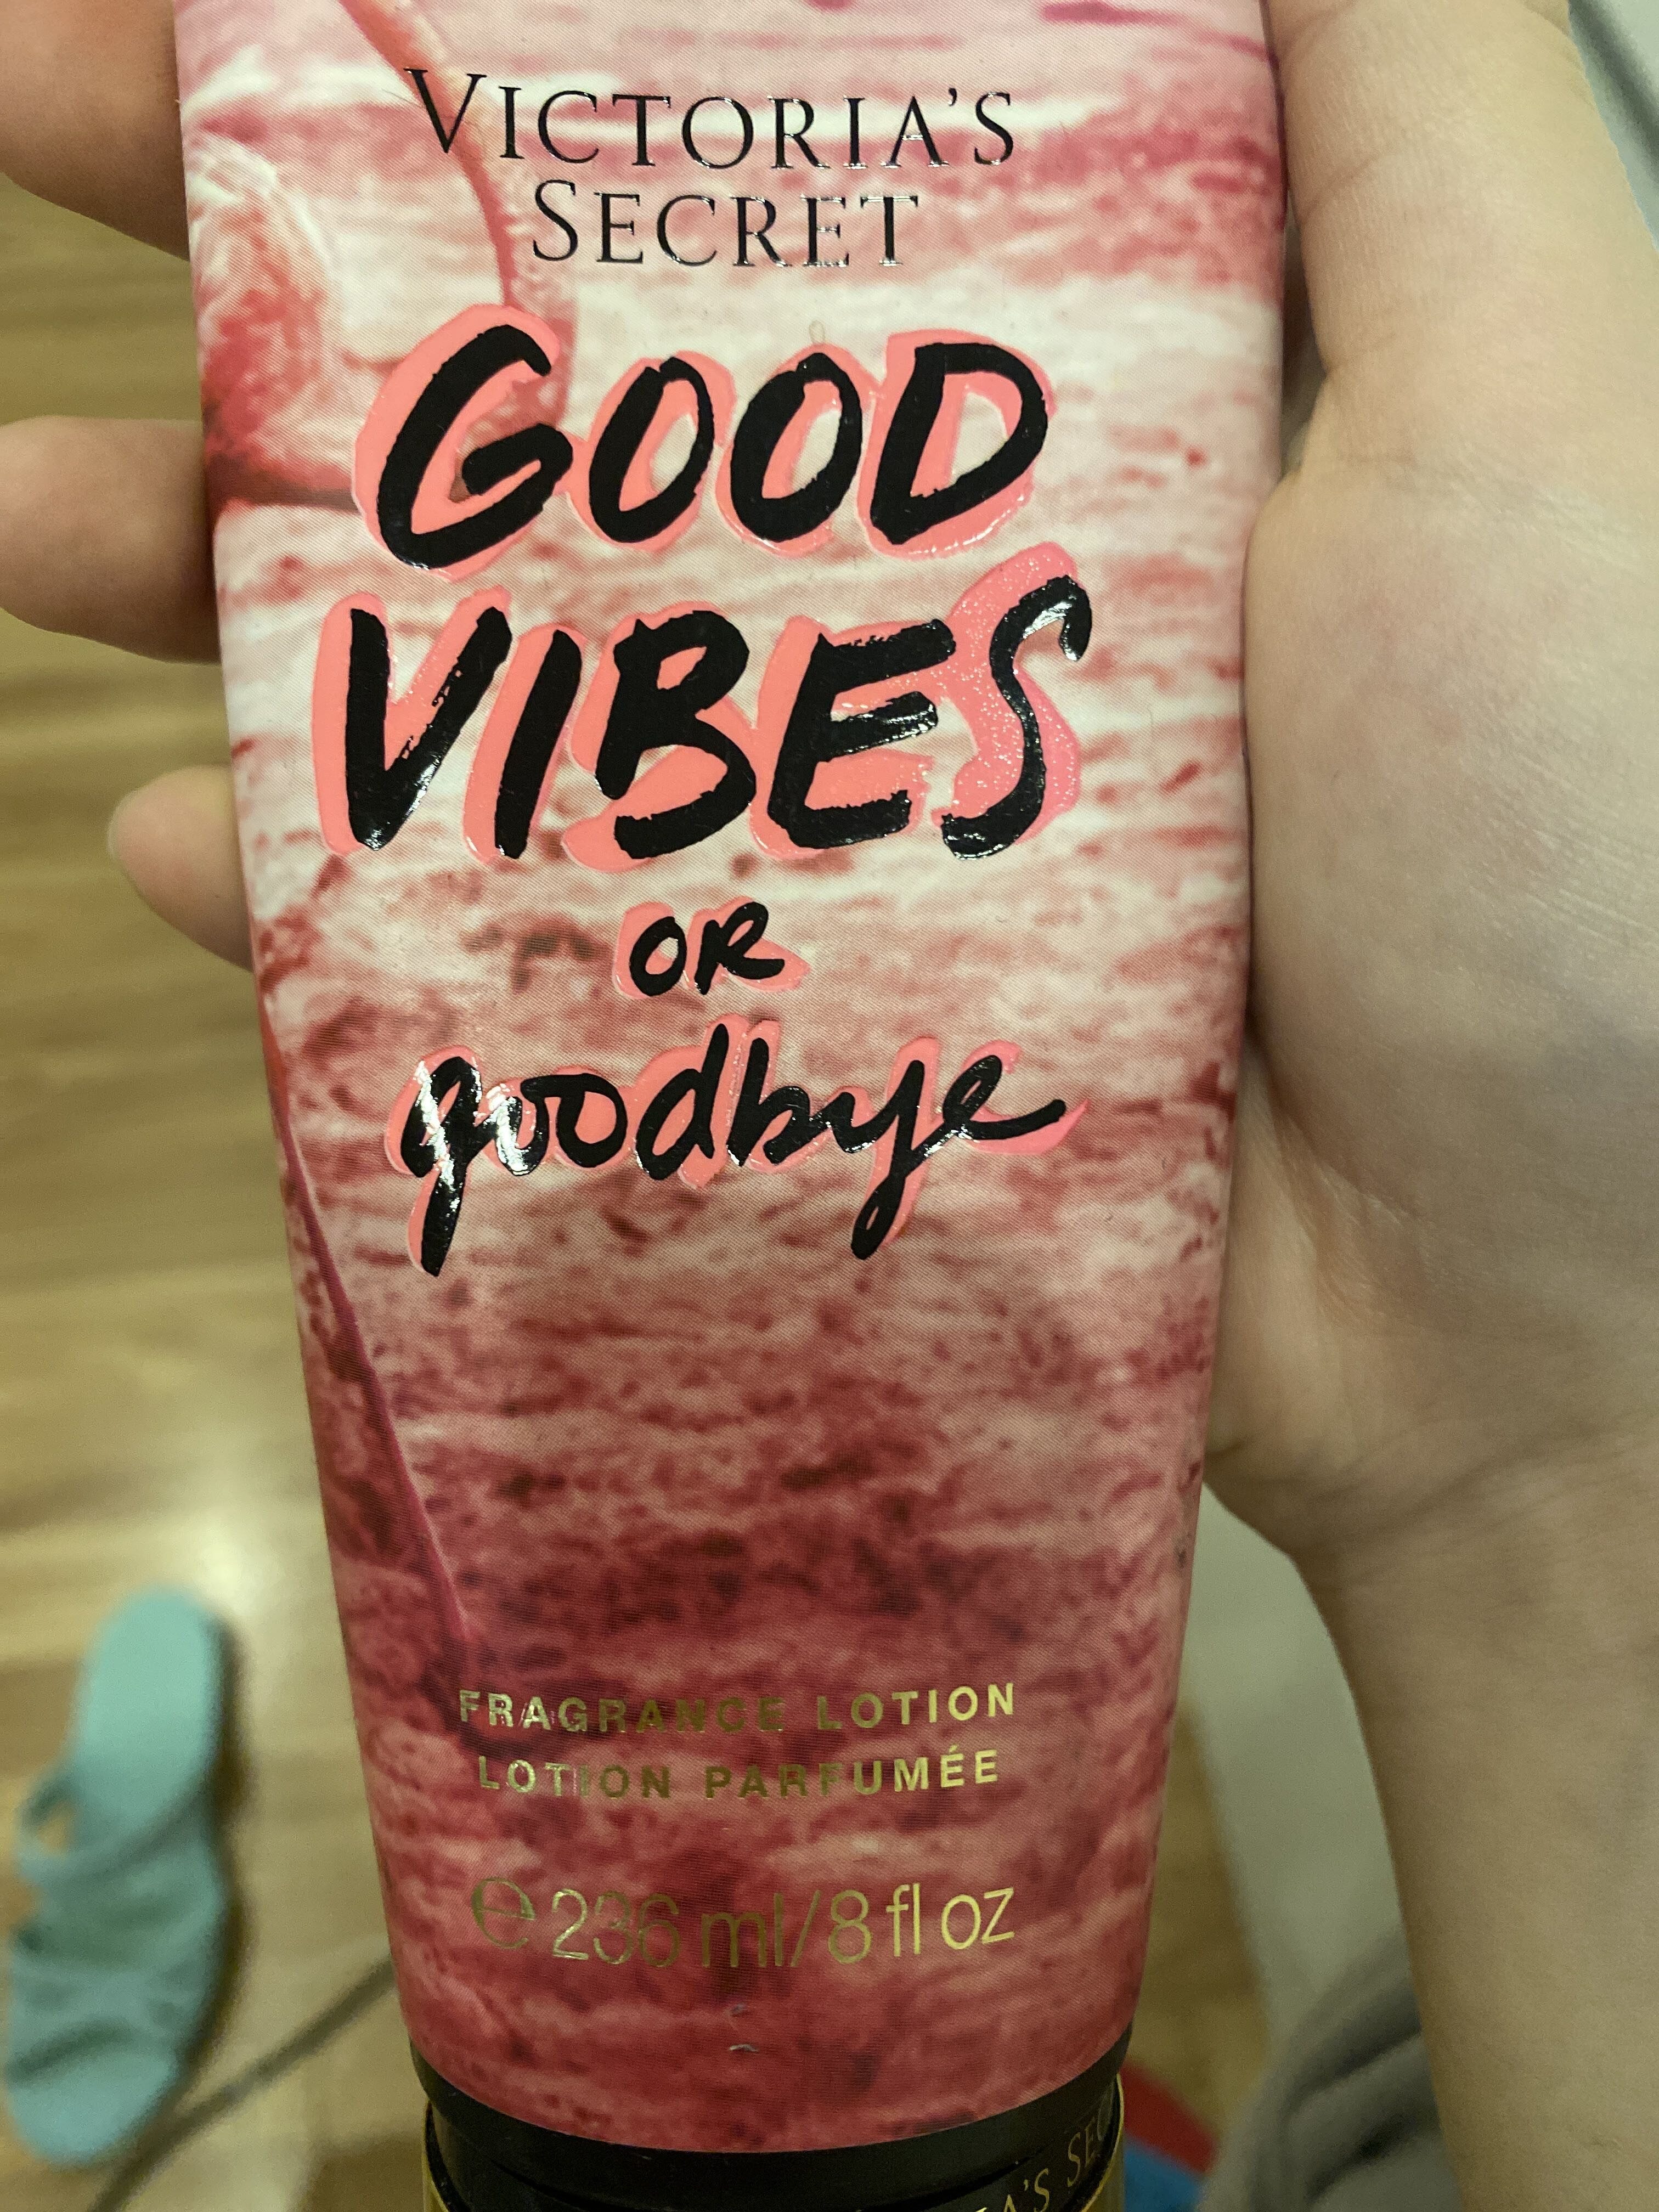 Good vibes - Produkt - en